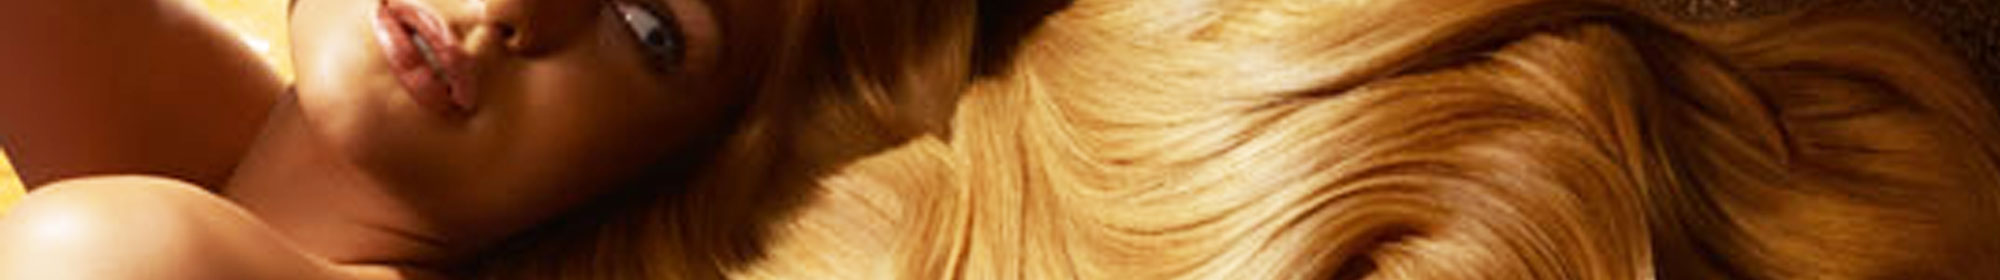 backgroung cheveux longs